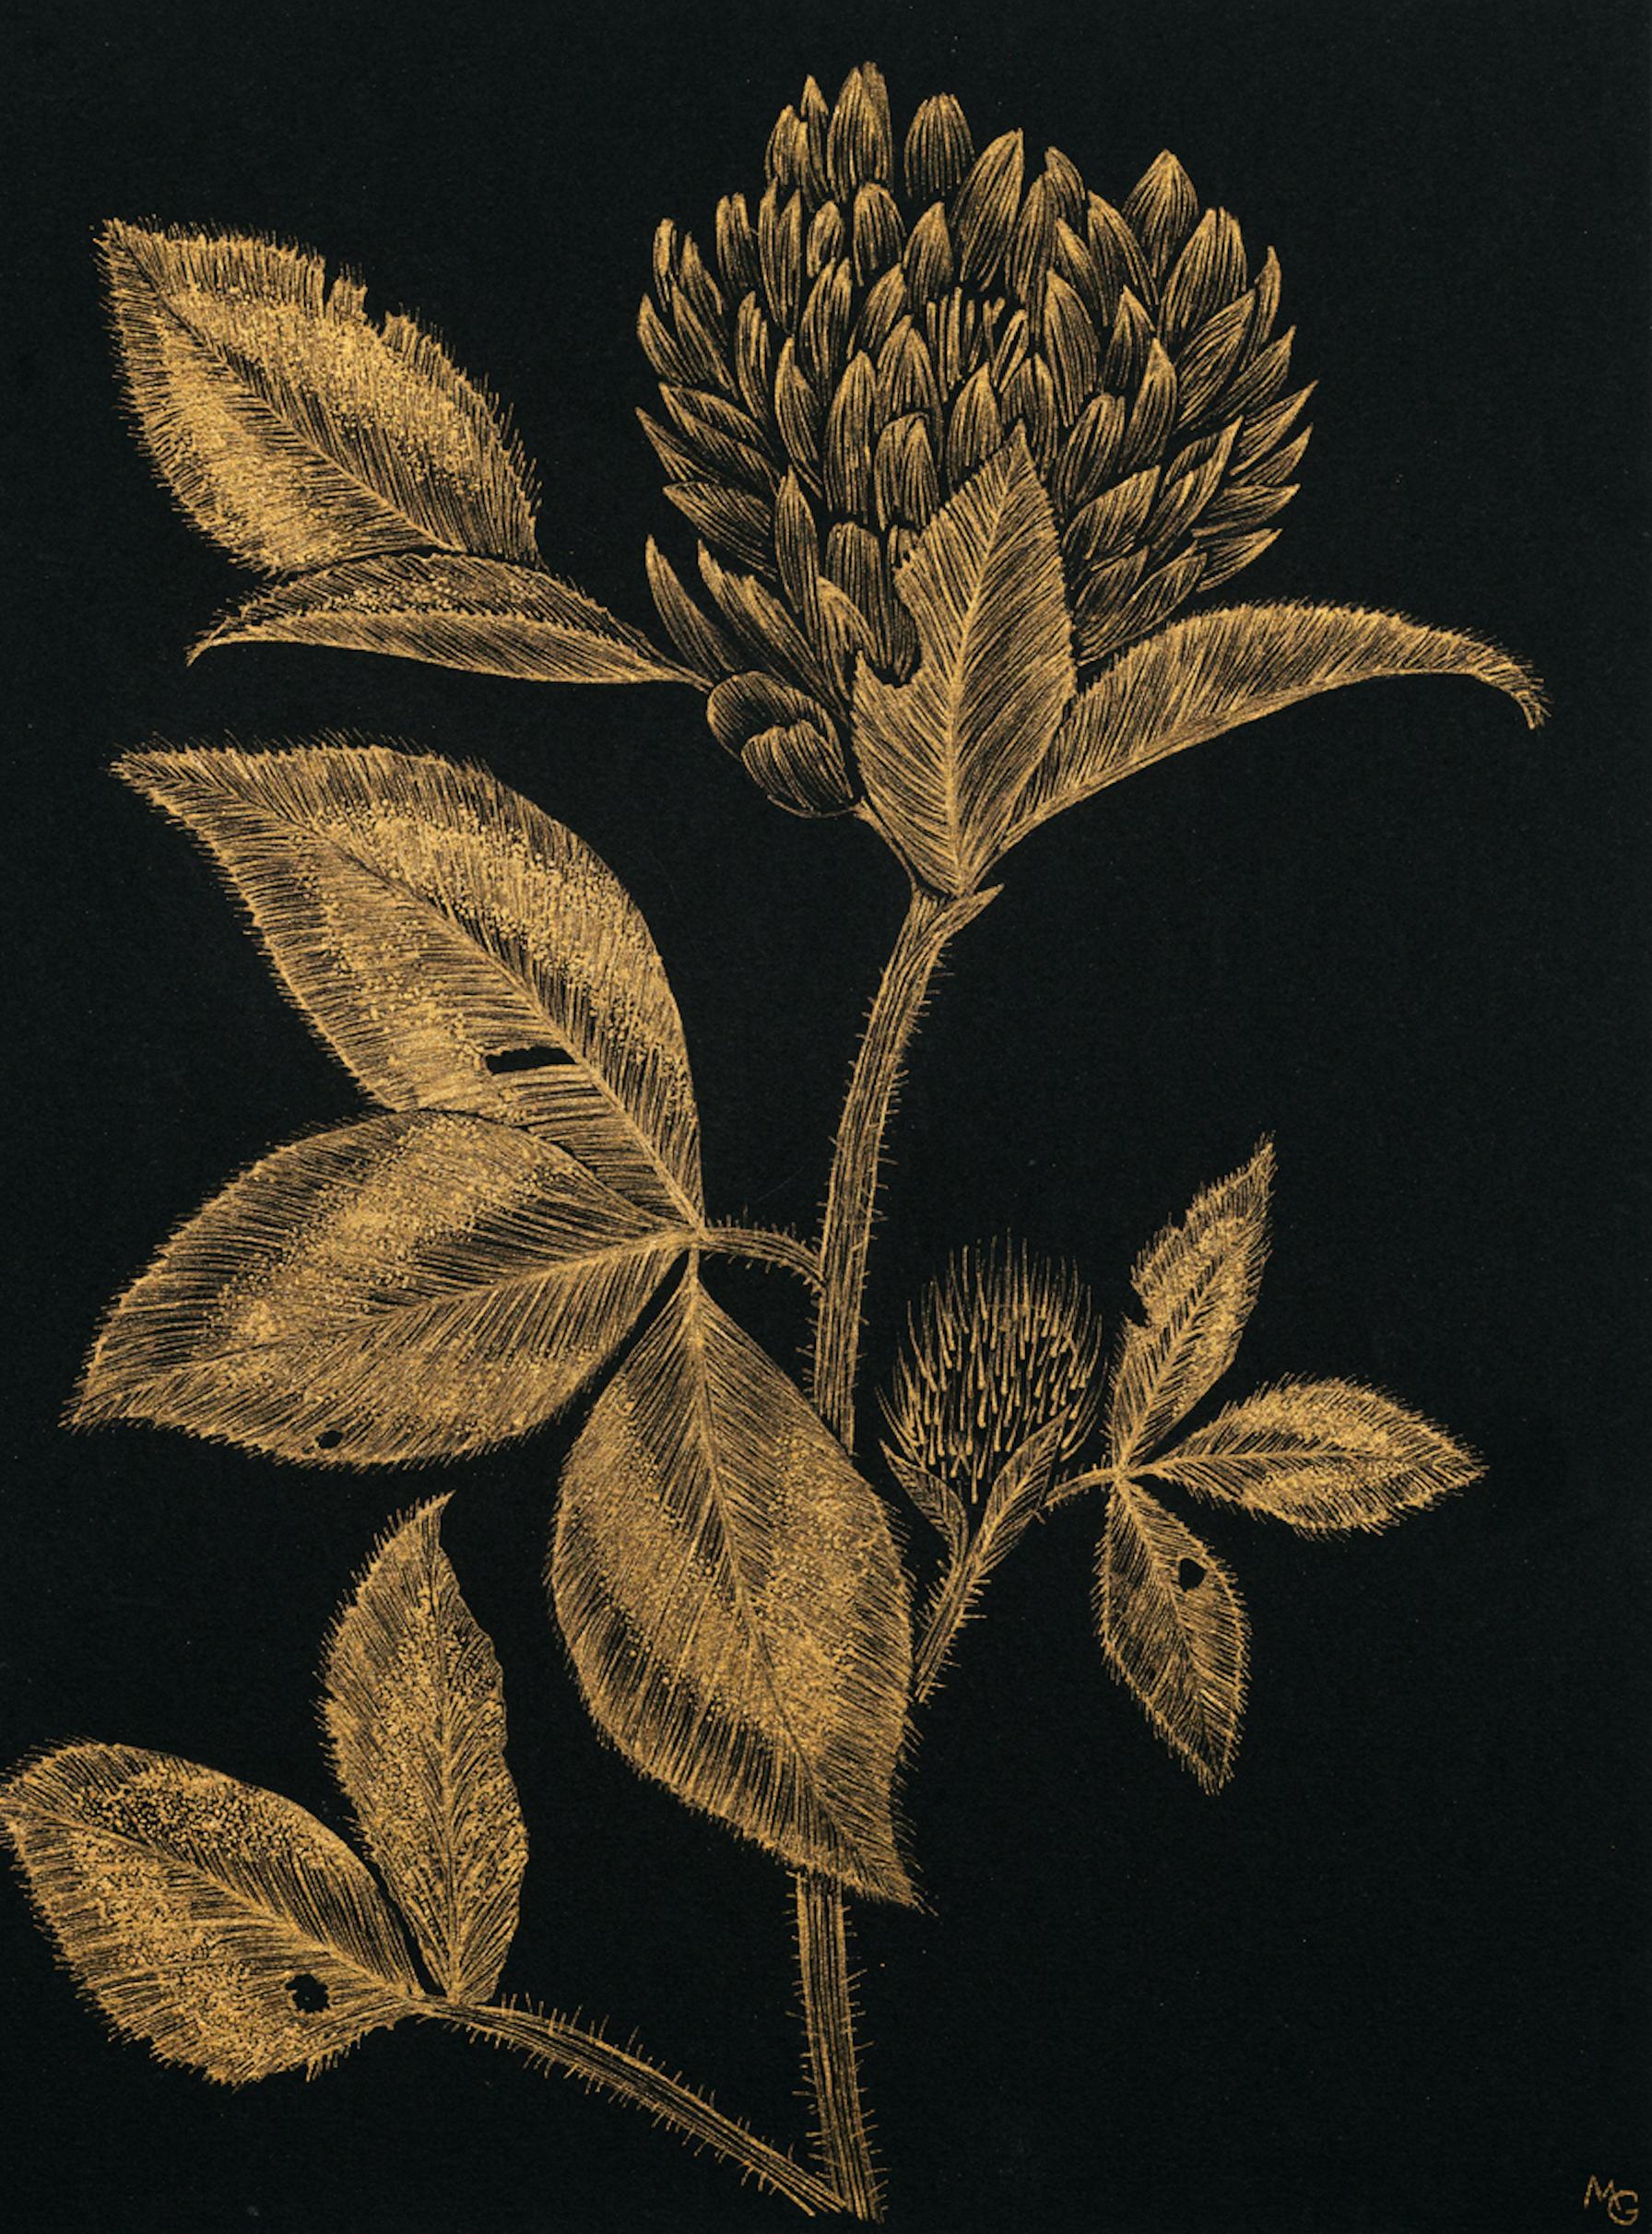 Margot Glass Still-Life - Red Clover #1, gold ink botanical still life drawing on black paper, 2020